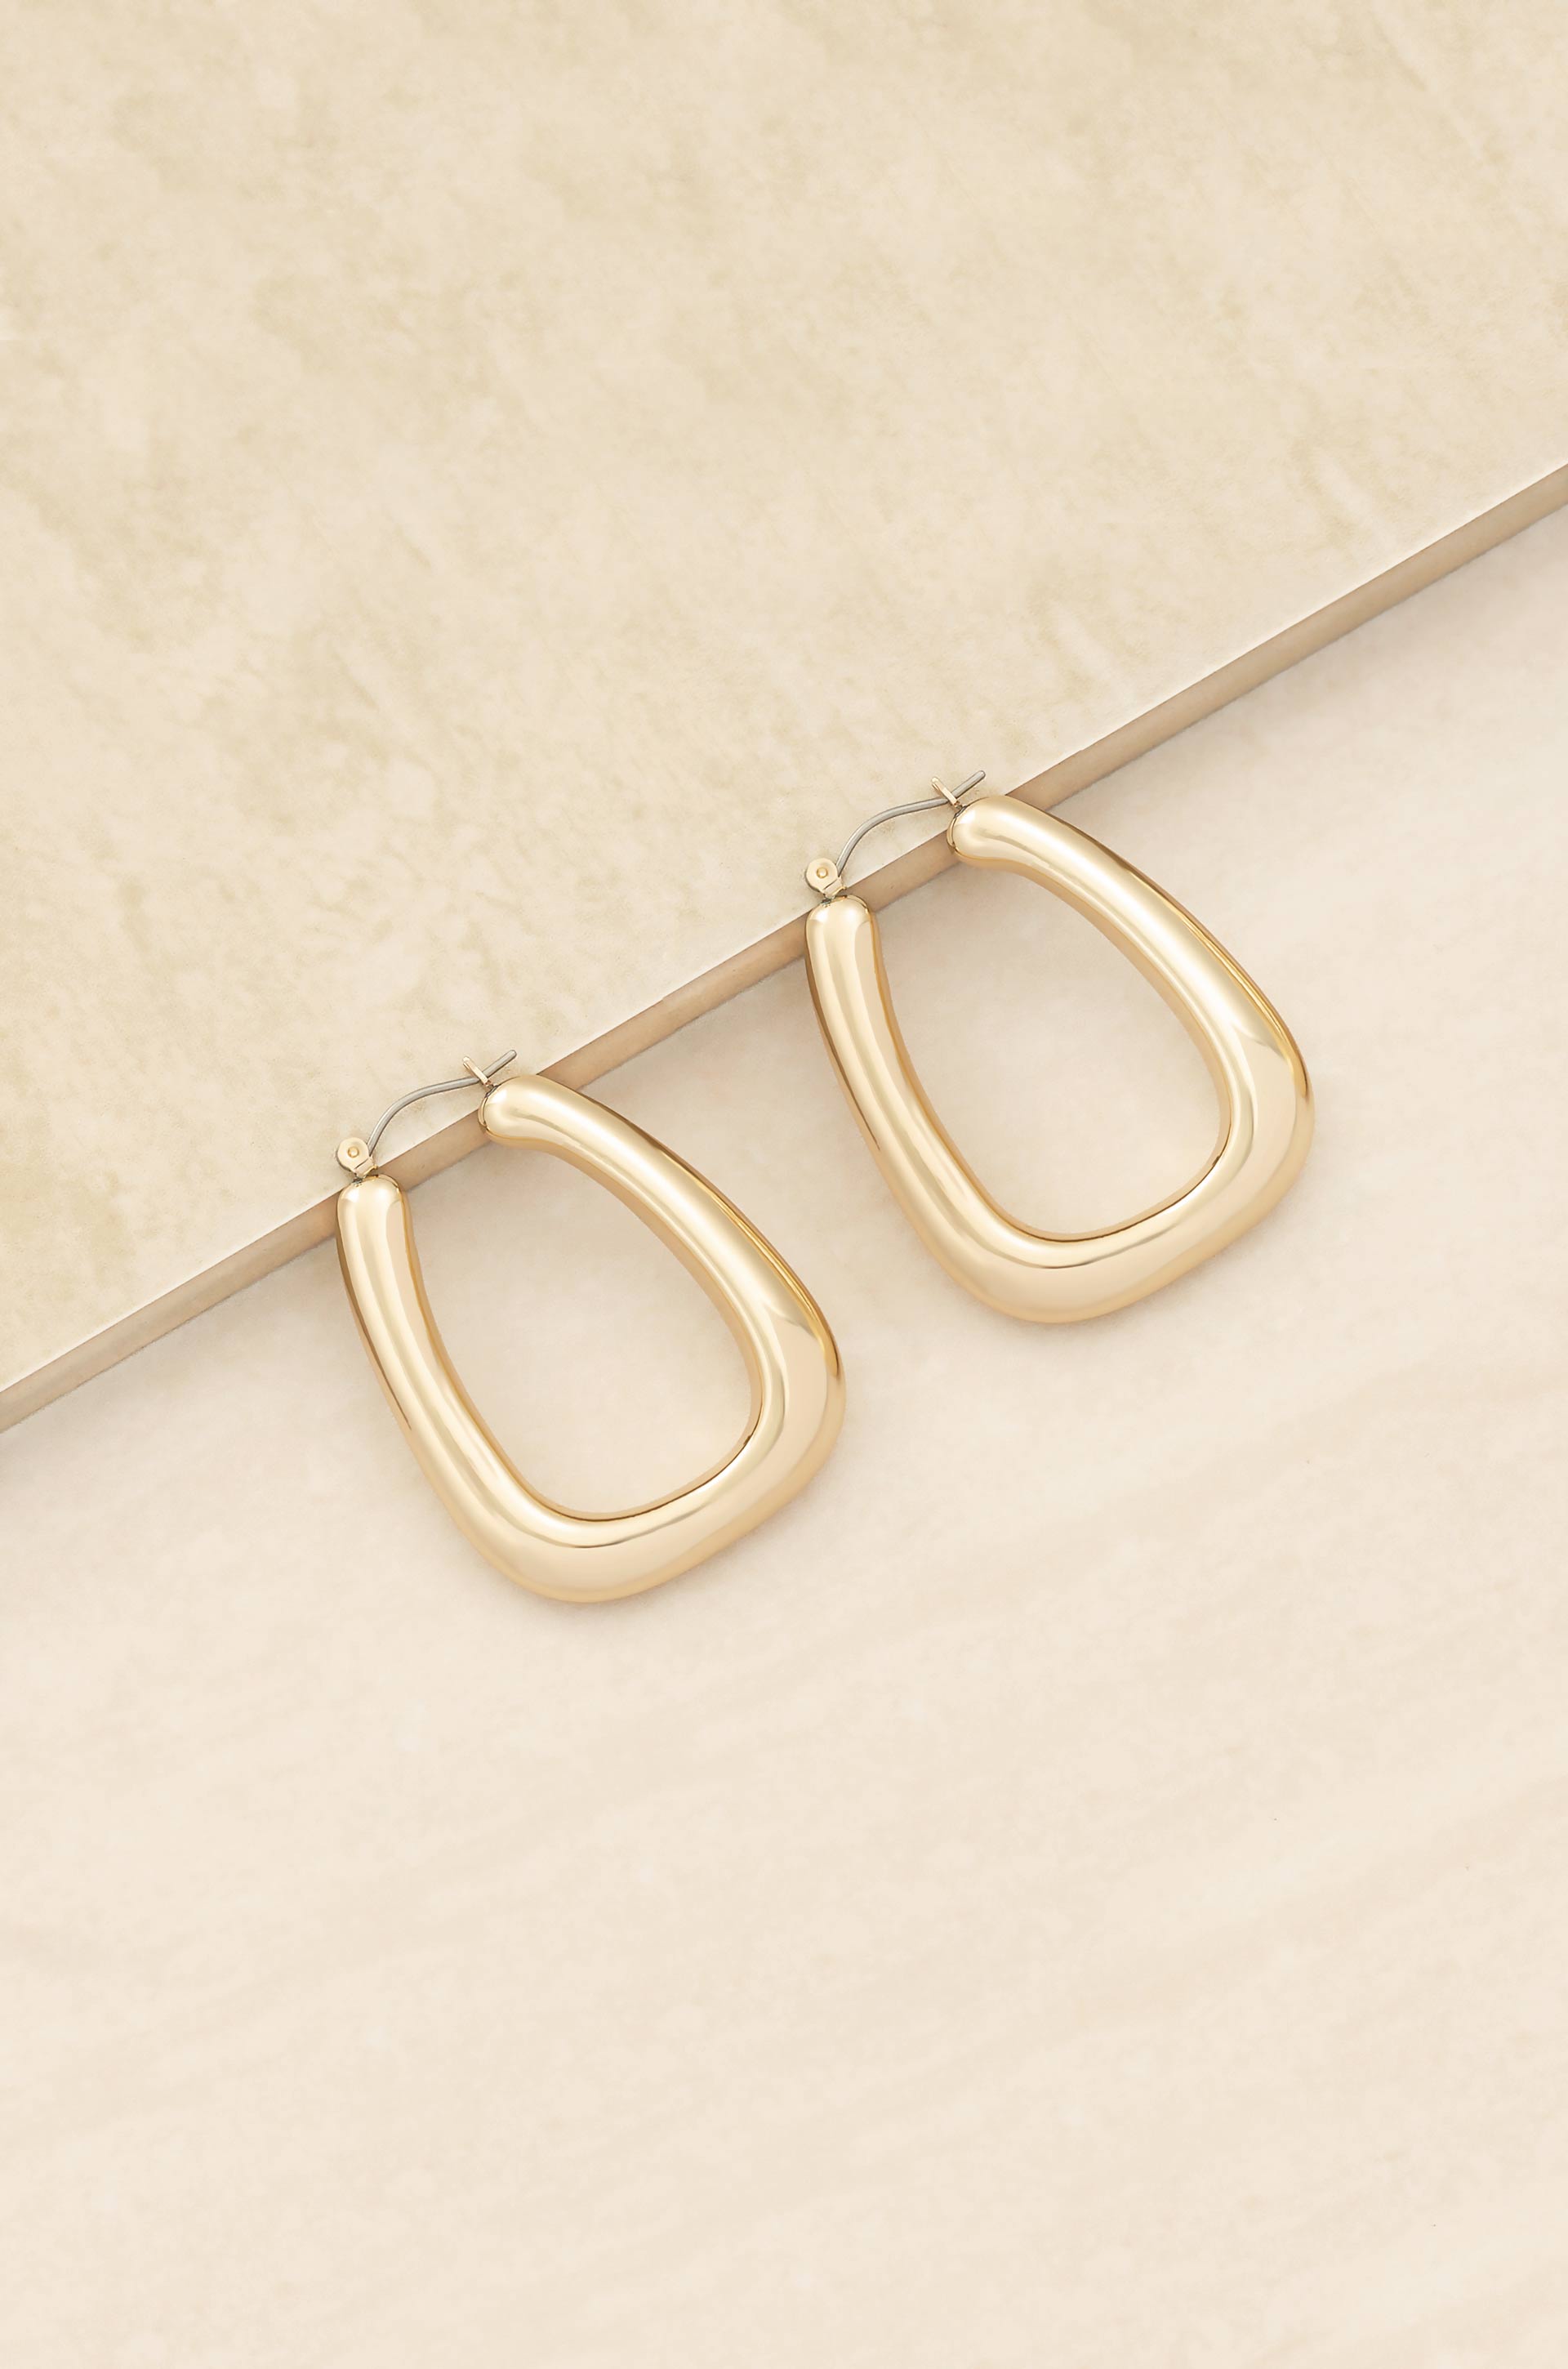 Everyday Boss 18k Gold Plated Hoop Earrings on slate background